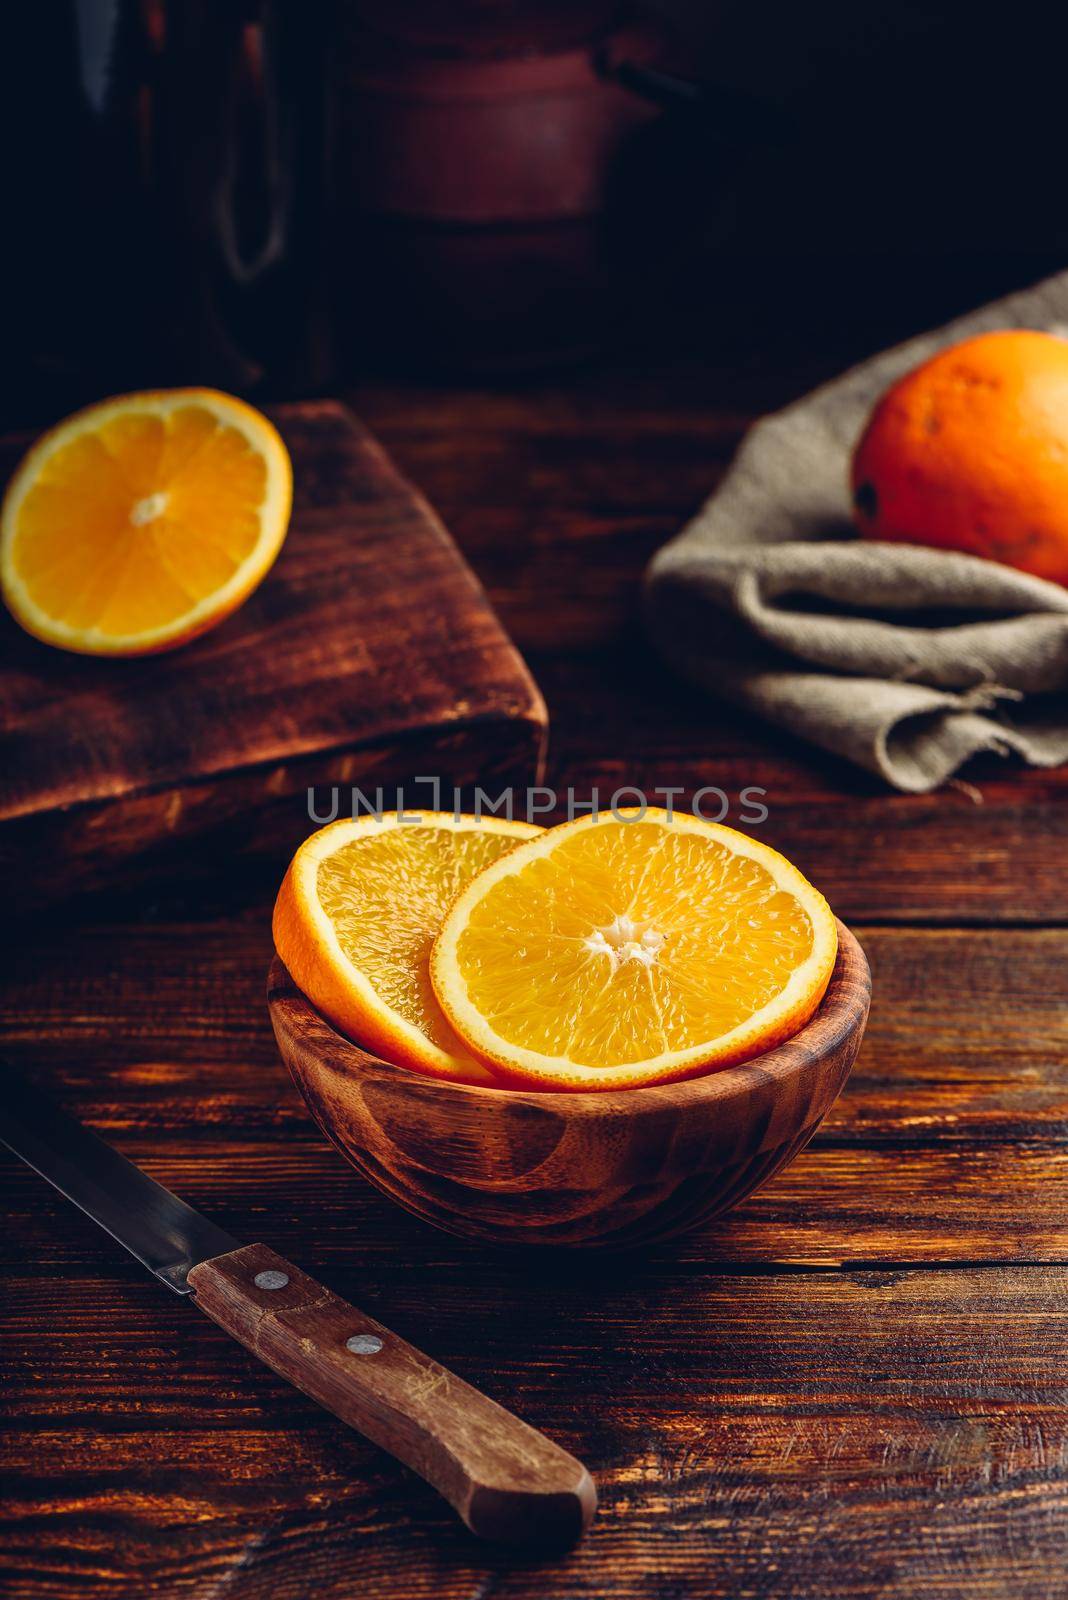 Slices of orange in a rustic bowl by Seva_blsv